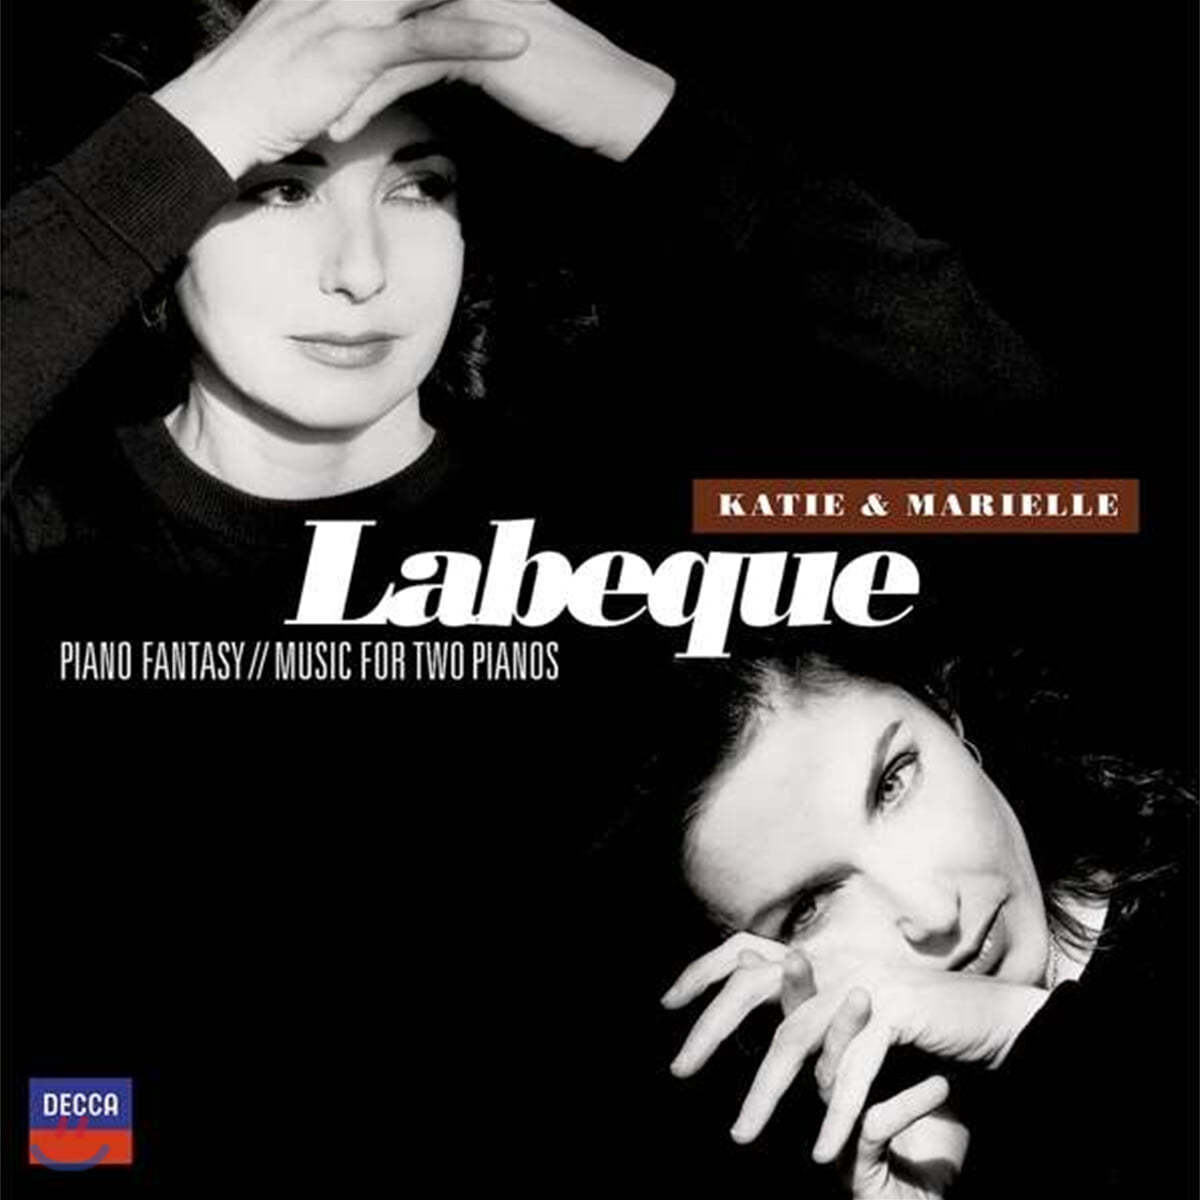 Katia &amp; Marielle Labeque (카티아 &amp; 마리엘레 라베끄) - Piano Fantasy , Music For Two Pianos 